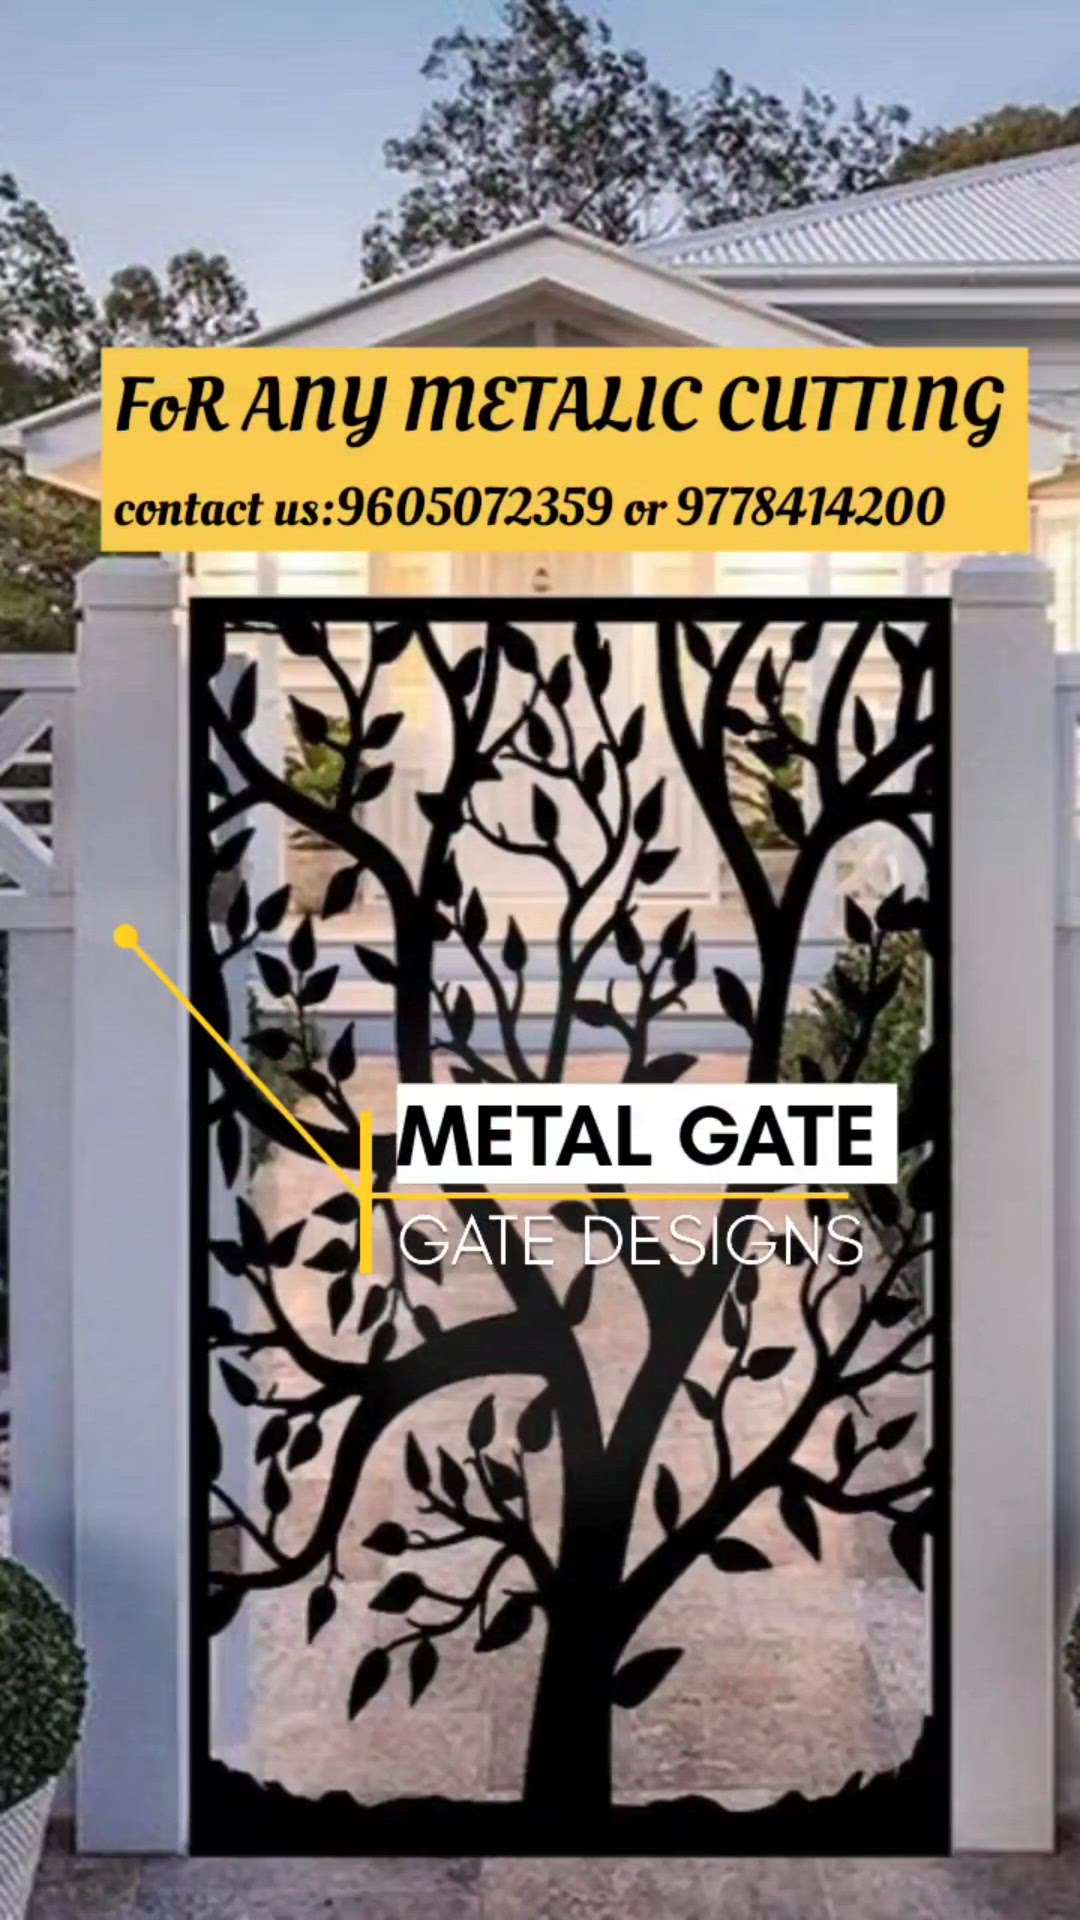 #cnc #cnclasercutting #cncpattern #cncmetalcuting #MetalCeiling #MetalSheetRoofing #metal #metalart #Metalpartition #Metalfurniture #Metal_hut #metalic #metalfabrication #metalhandrails #gateDesign #metalcnc #Metalpartition #metalpergola #cnchandrails #cncgate #gates #handrails #ambience #ambiencecnc #ambiencecnccuttinghub #ambienceservices #eanchakkal #trivantrum #InteriorDesigner #Architectural&Interior #KitchenIdeas #4DoorWardrobe #VboardPartition #budget #budgetfriendly #HomeDecor #InteriorDesigner